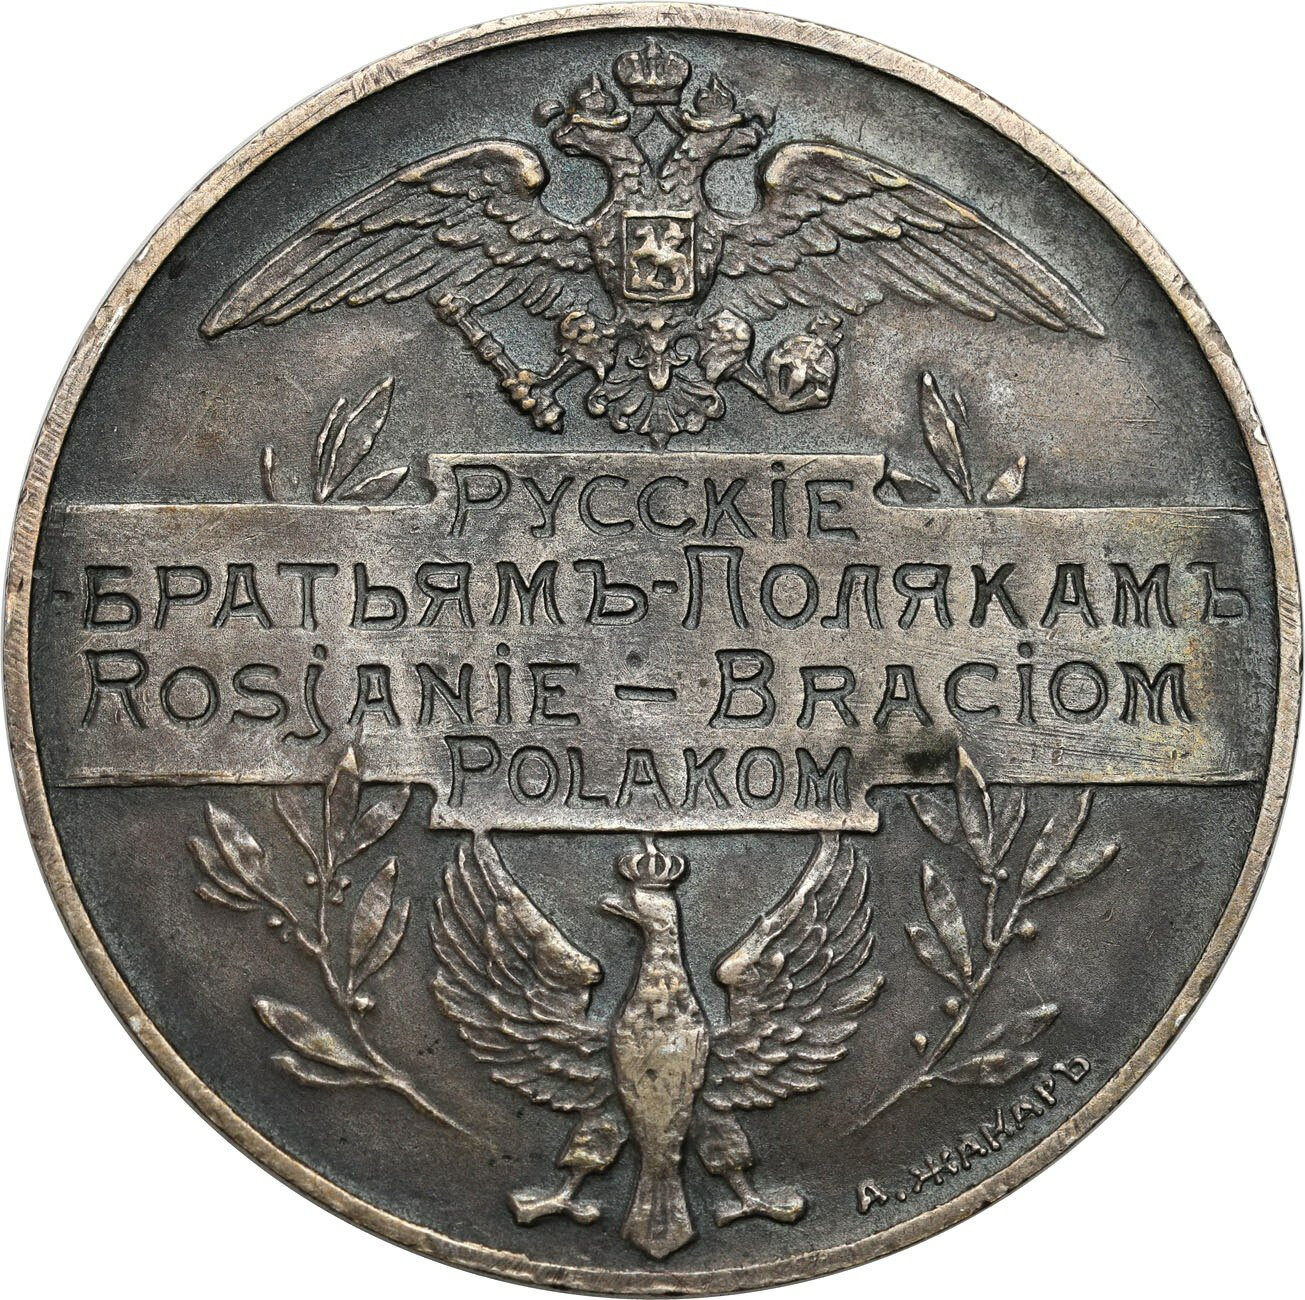 Polska pod zaborami. Medal Rosjanie Braciom Polakom 1914, wariant 32,7 mm